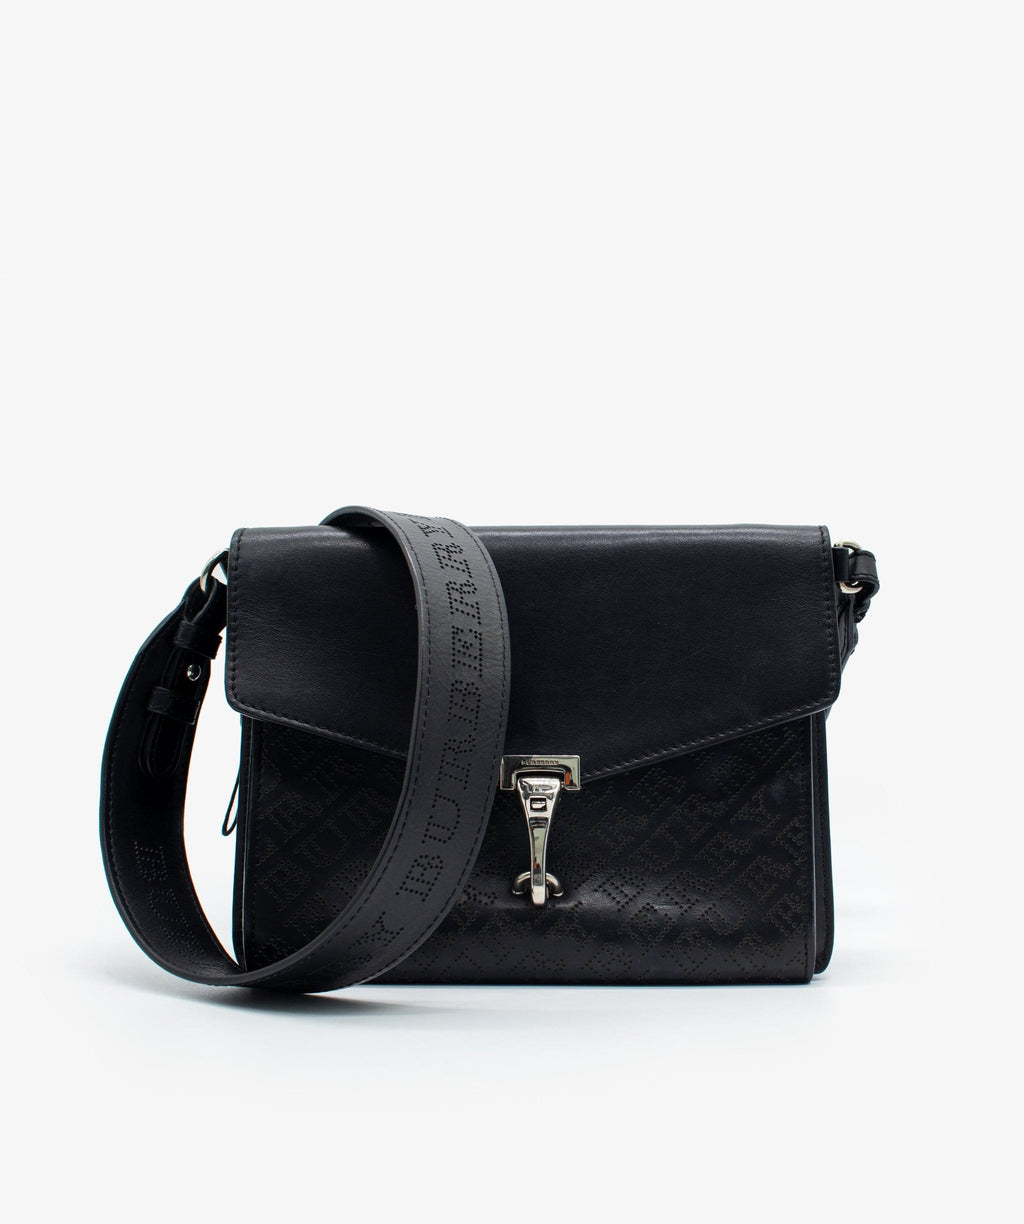 Burberry Black Leather Macken Crossbody Bag